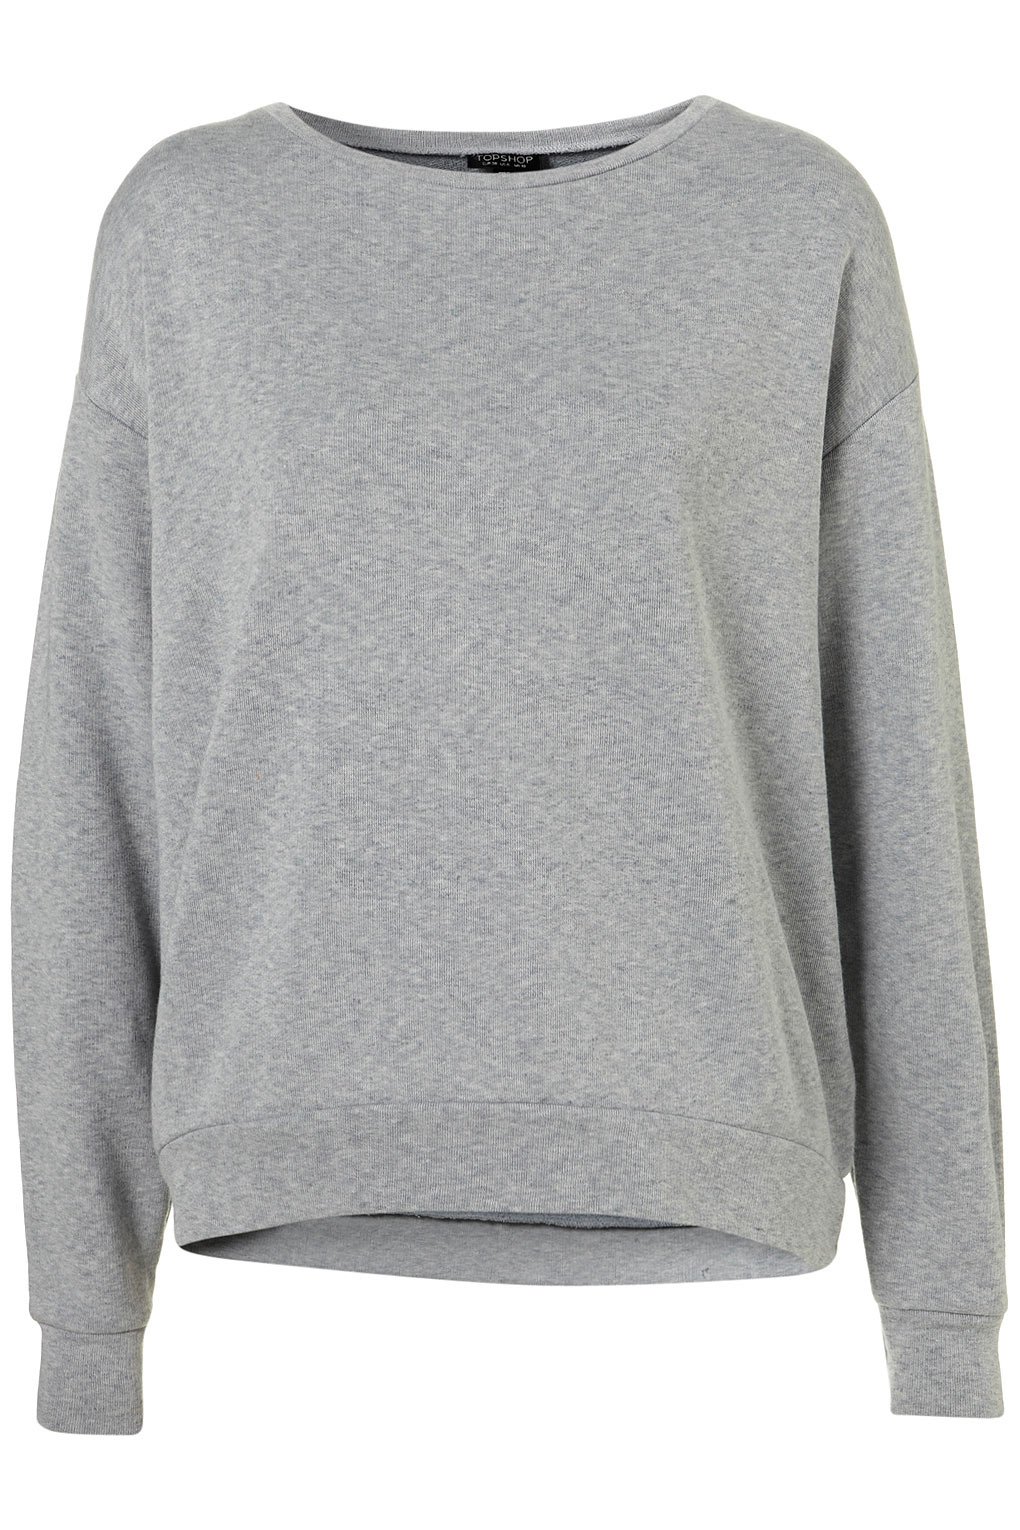 Topshop Curve Hem Sweater In Gray Grey Lyst